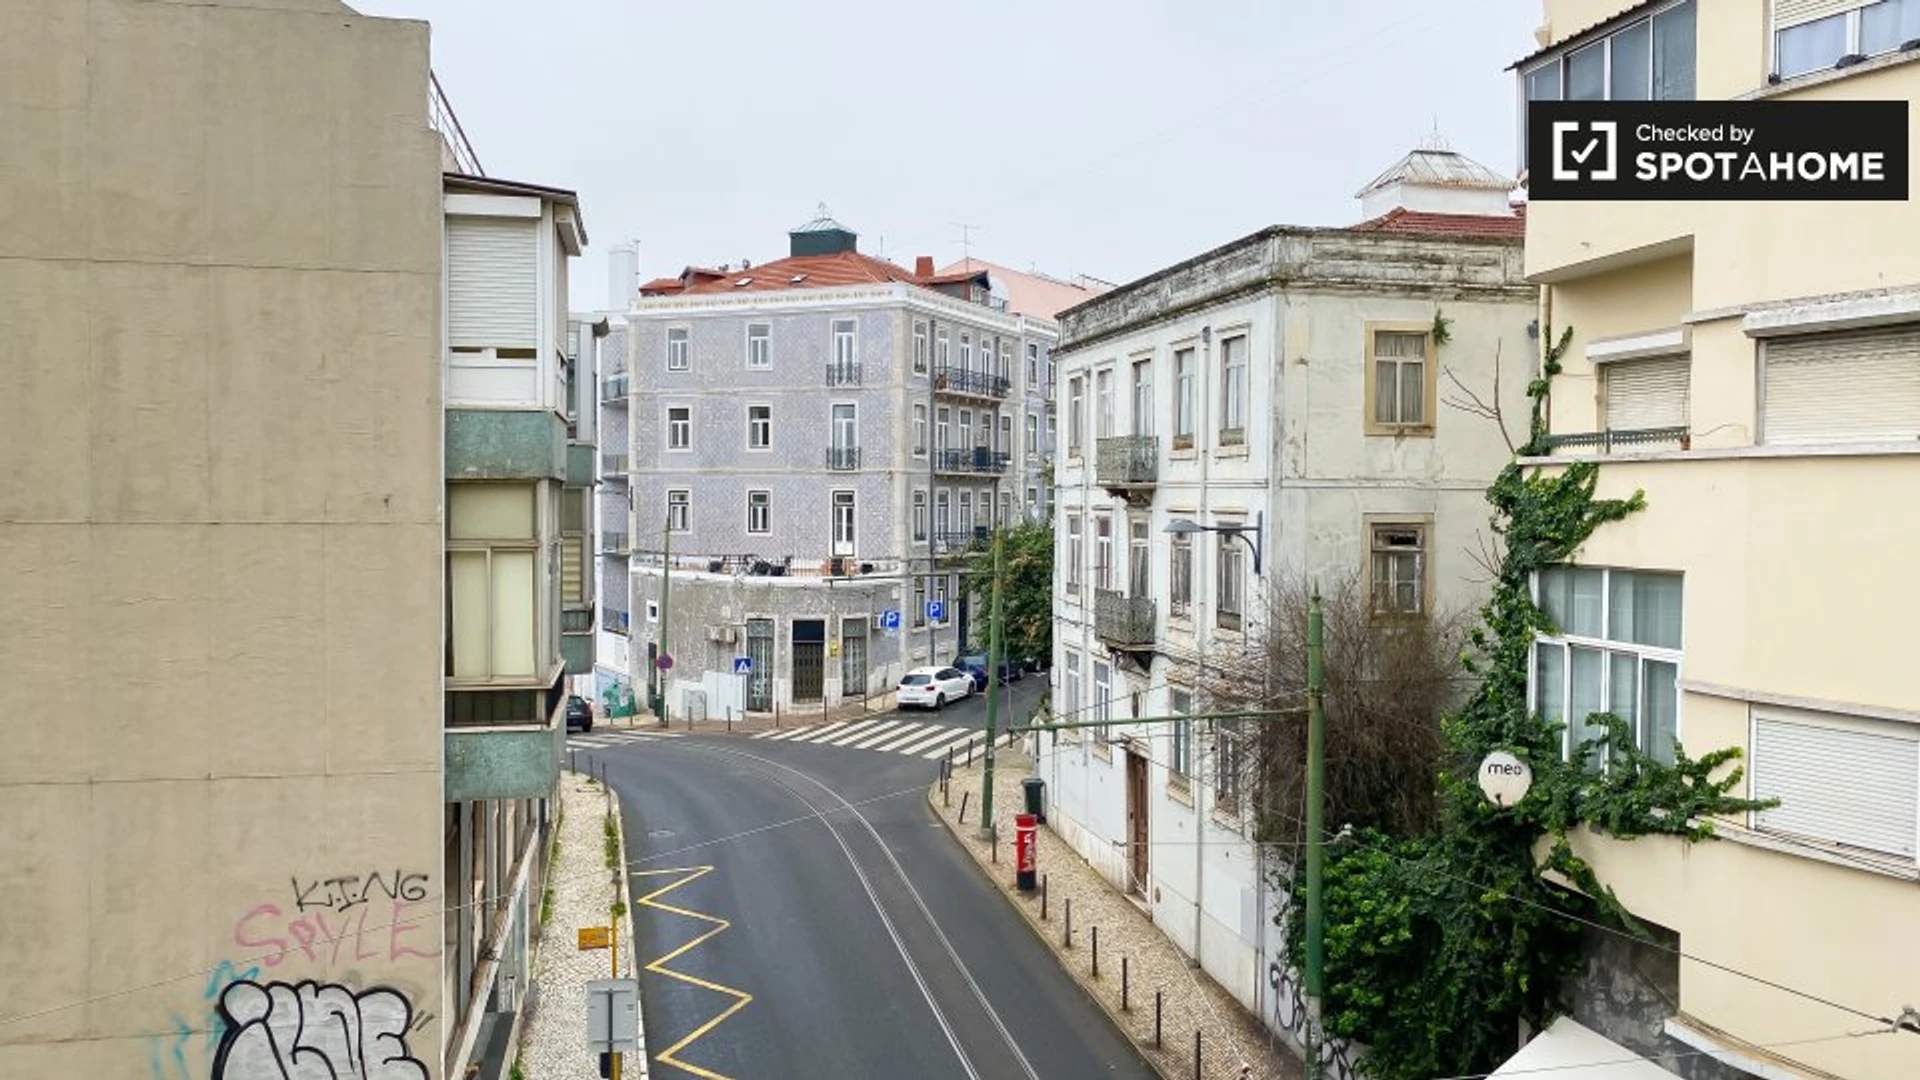 Stanze affittabili mensilmente a Lisbona